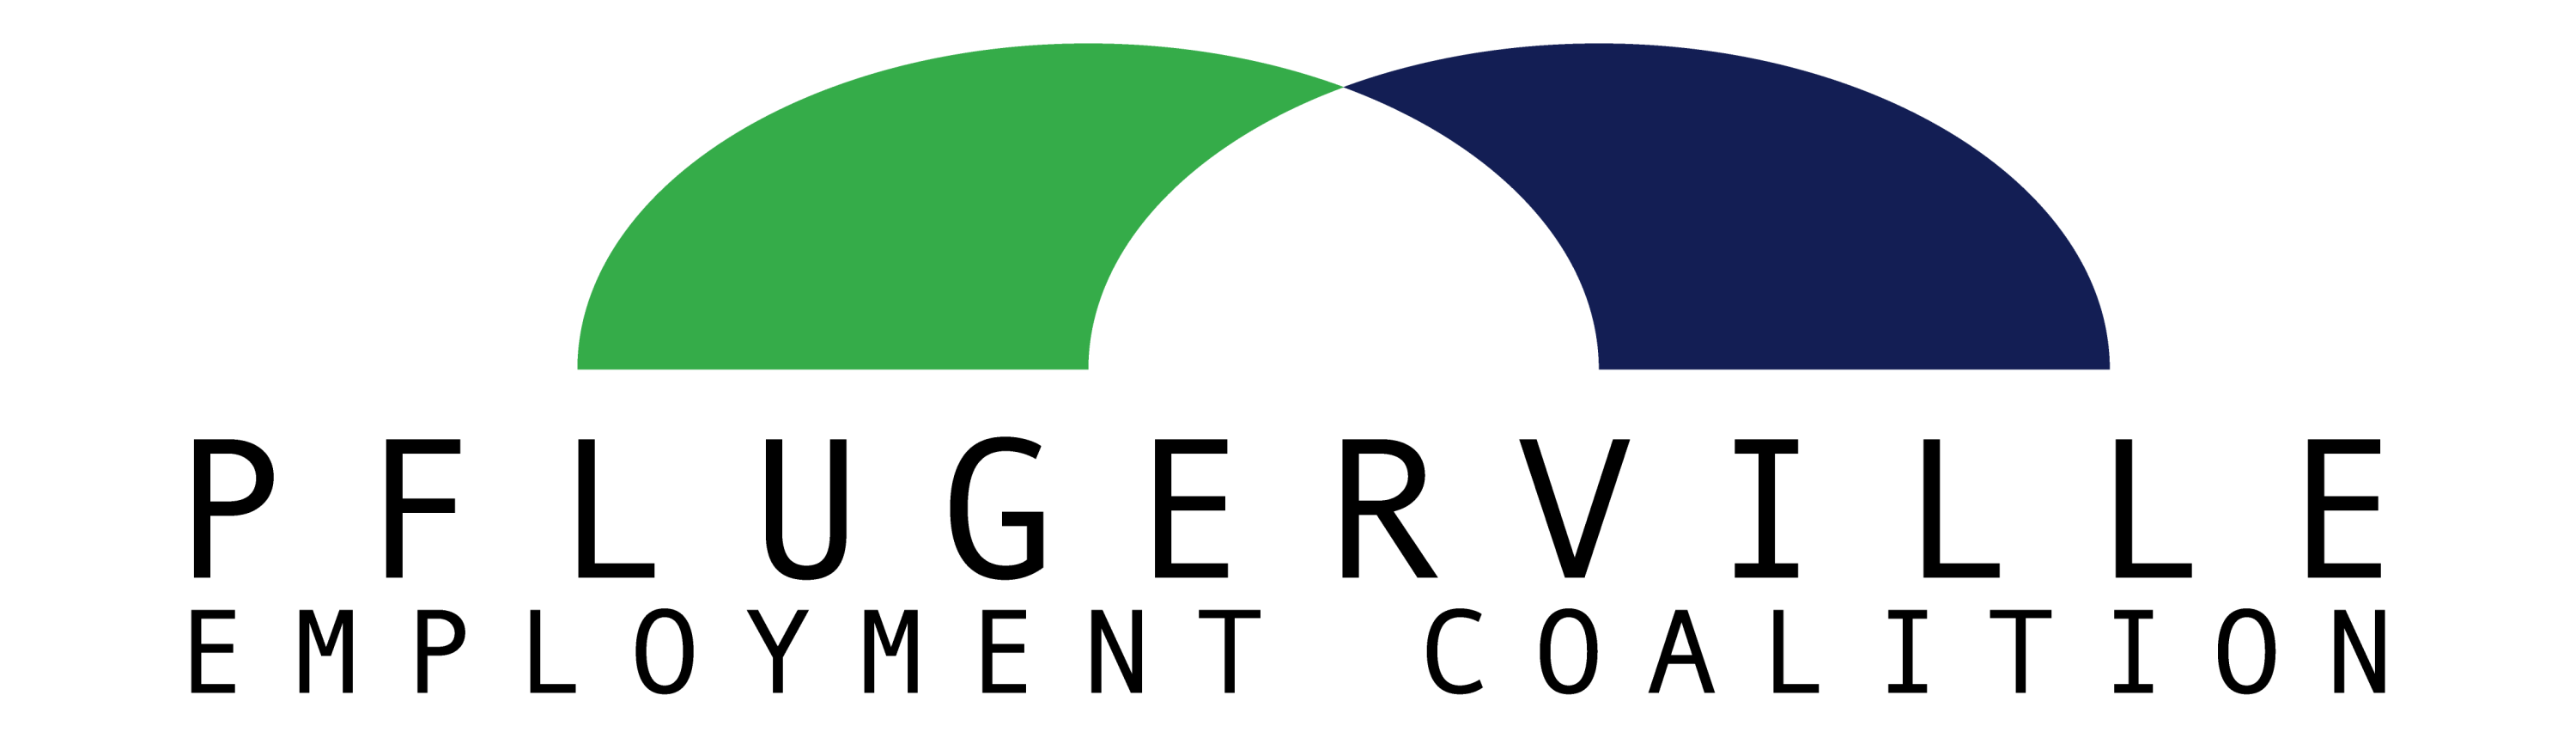 Pflugerville Employment Coalition logo